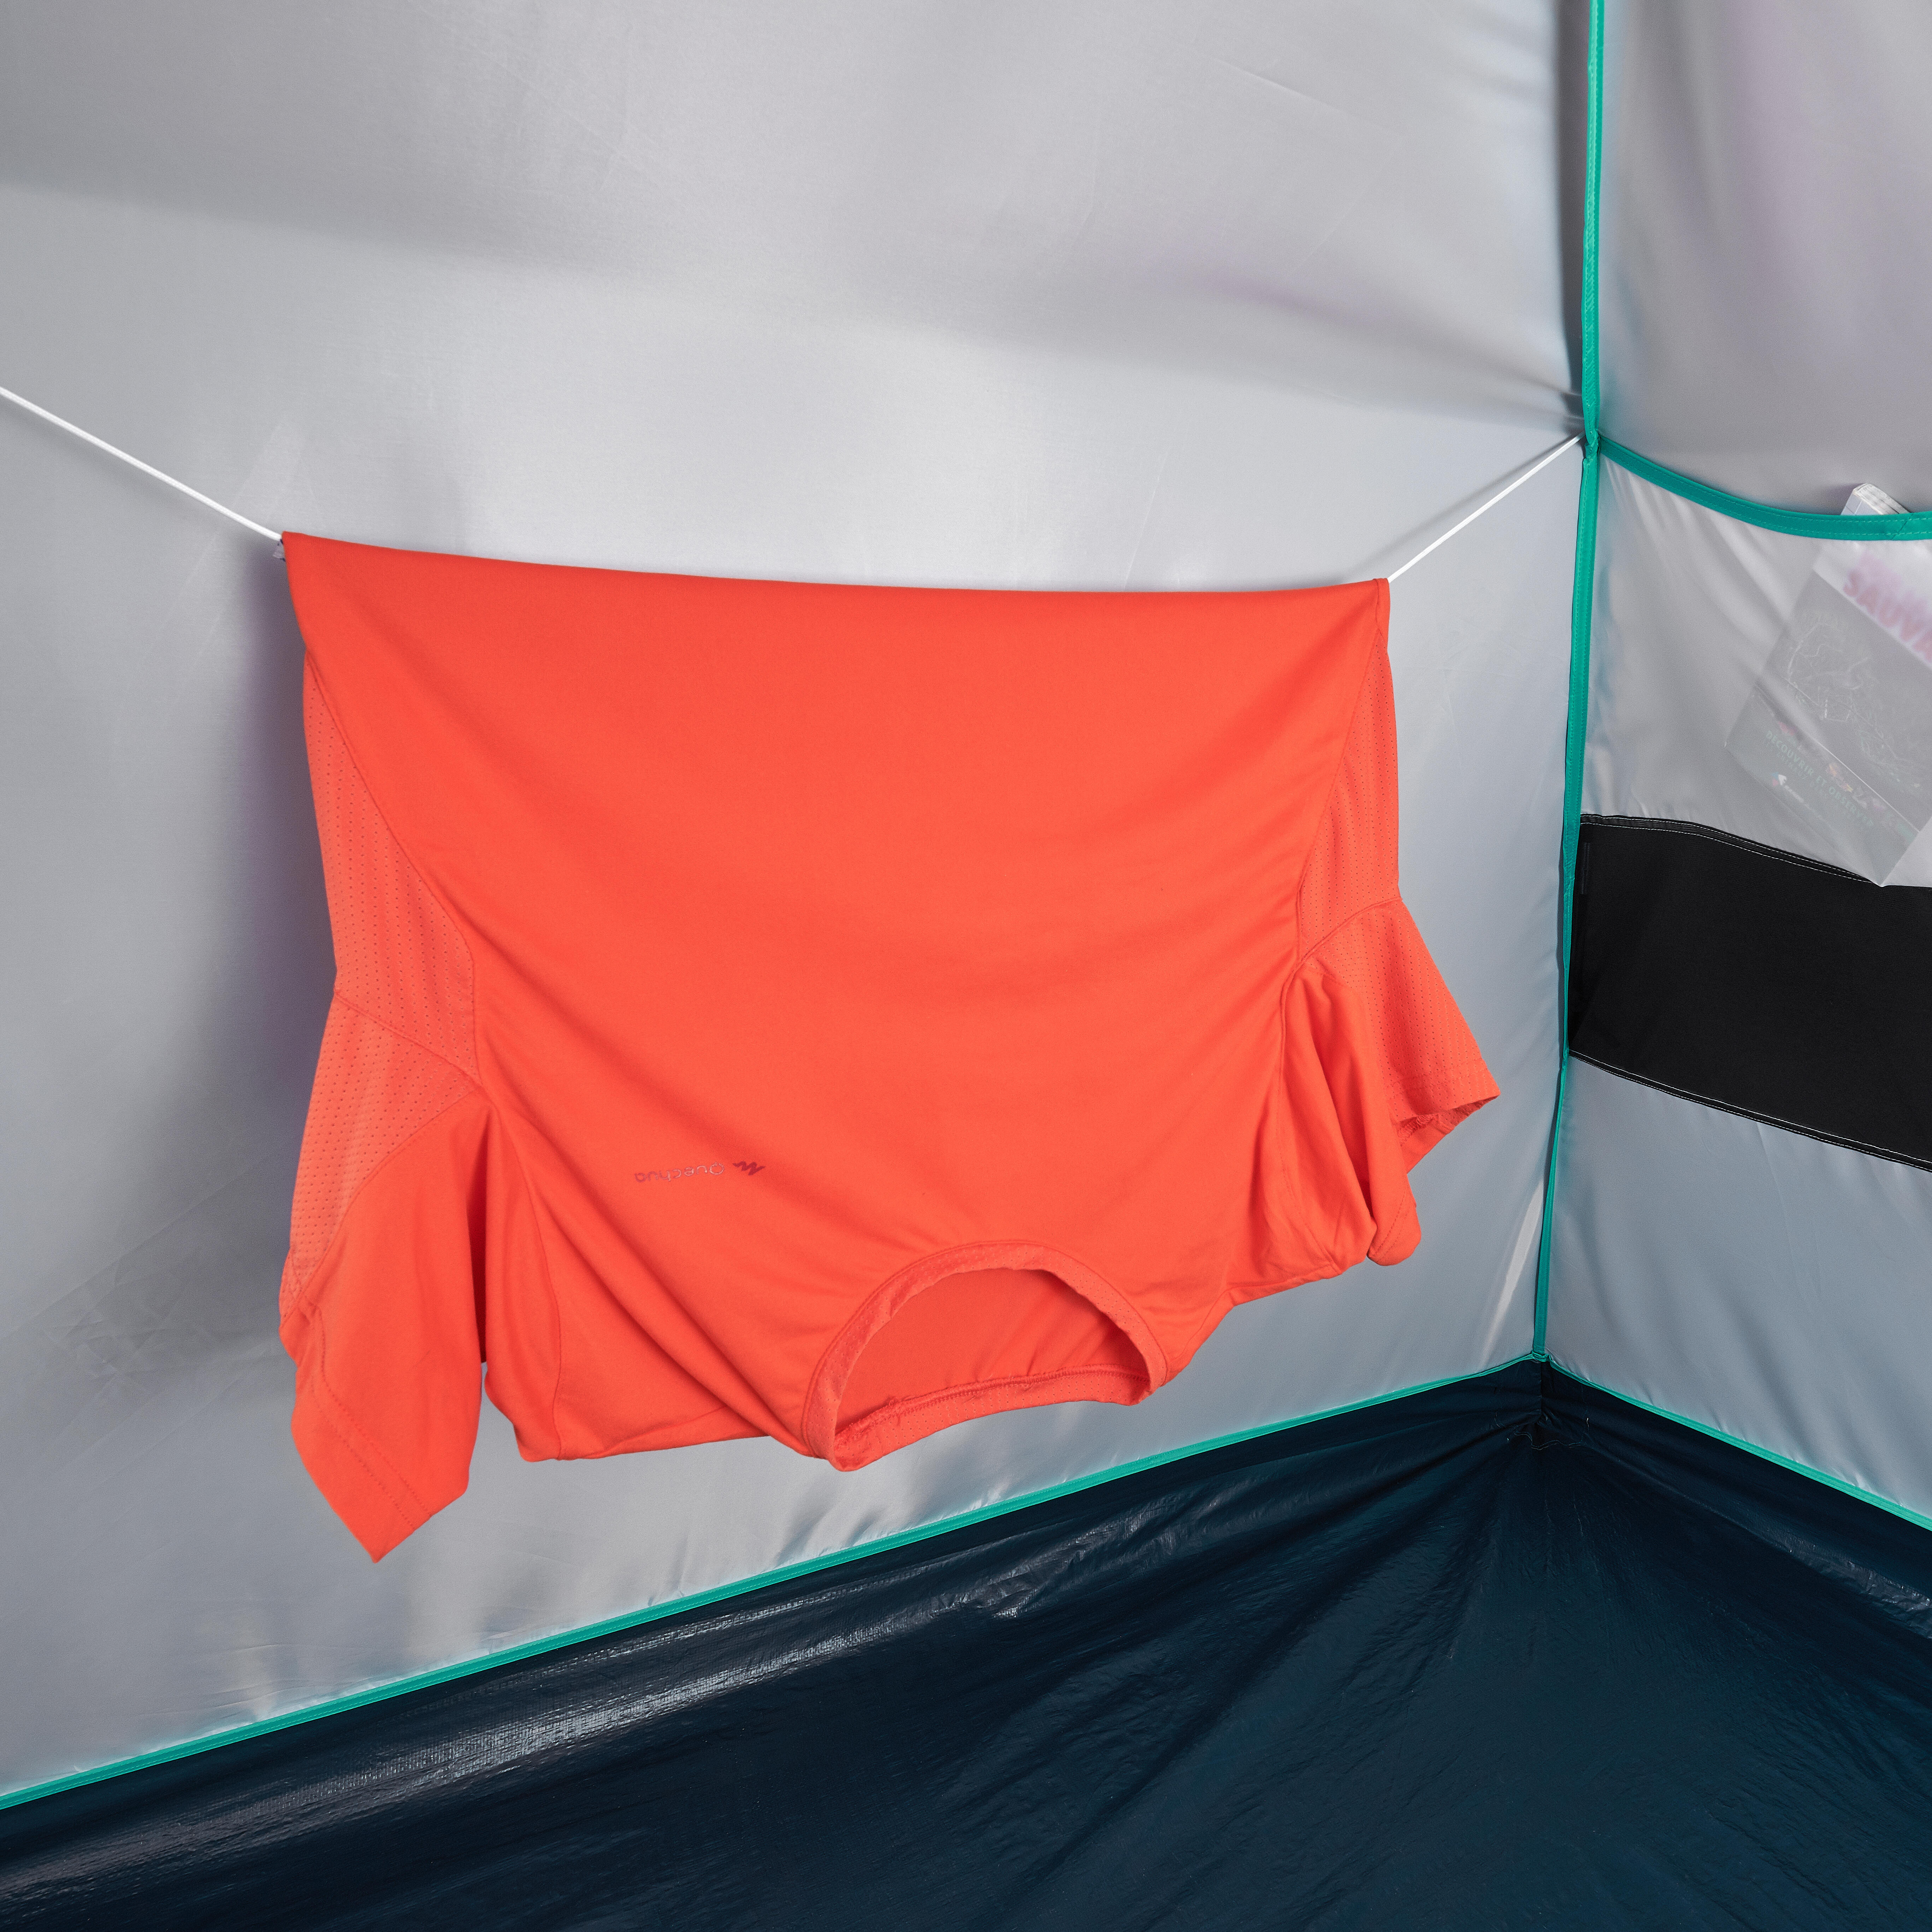 3-person Camping Tent - MH 100 - QUECHUA